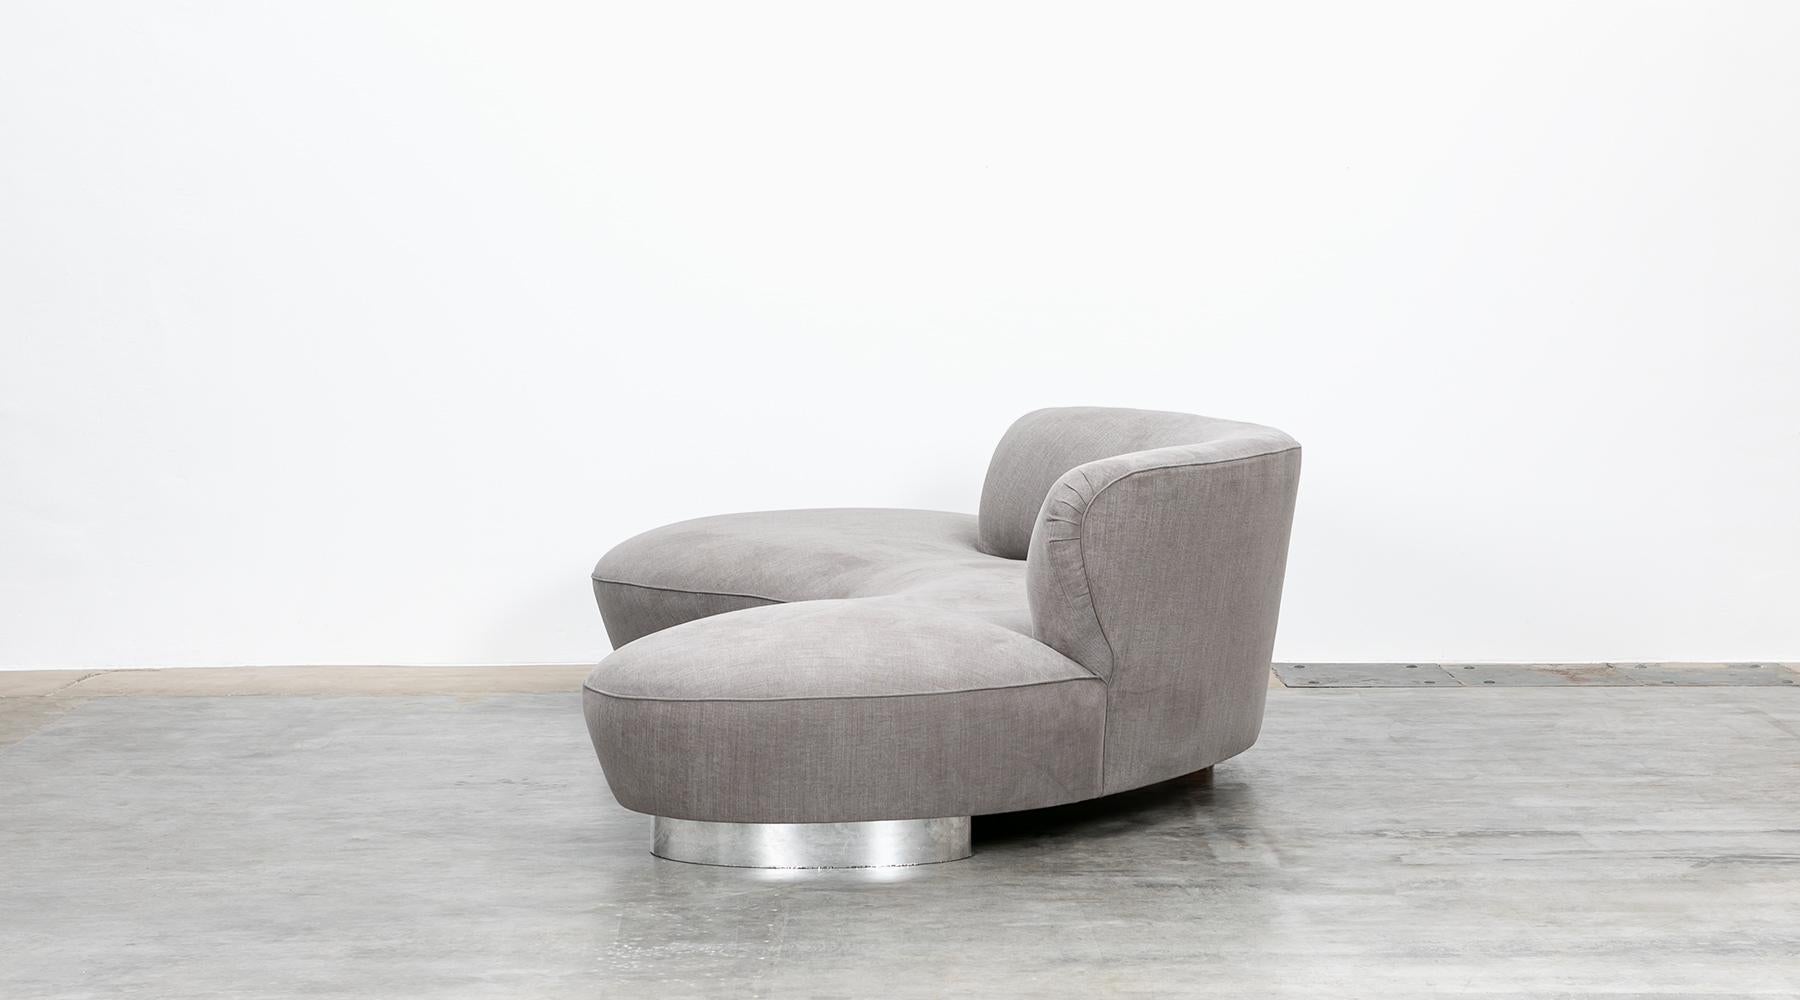 Mid-Century Modern 1980s Warm Grey, New Upholstery Sofa by Vladimir Kagan